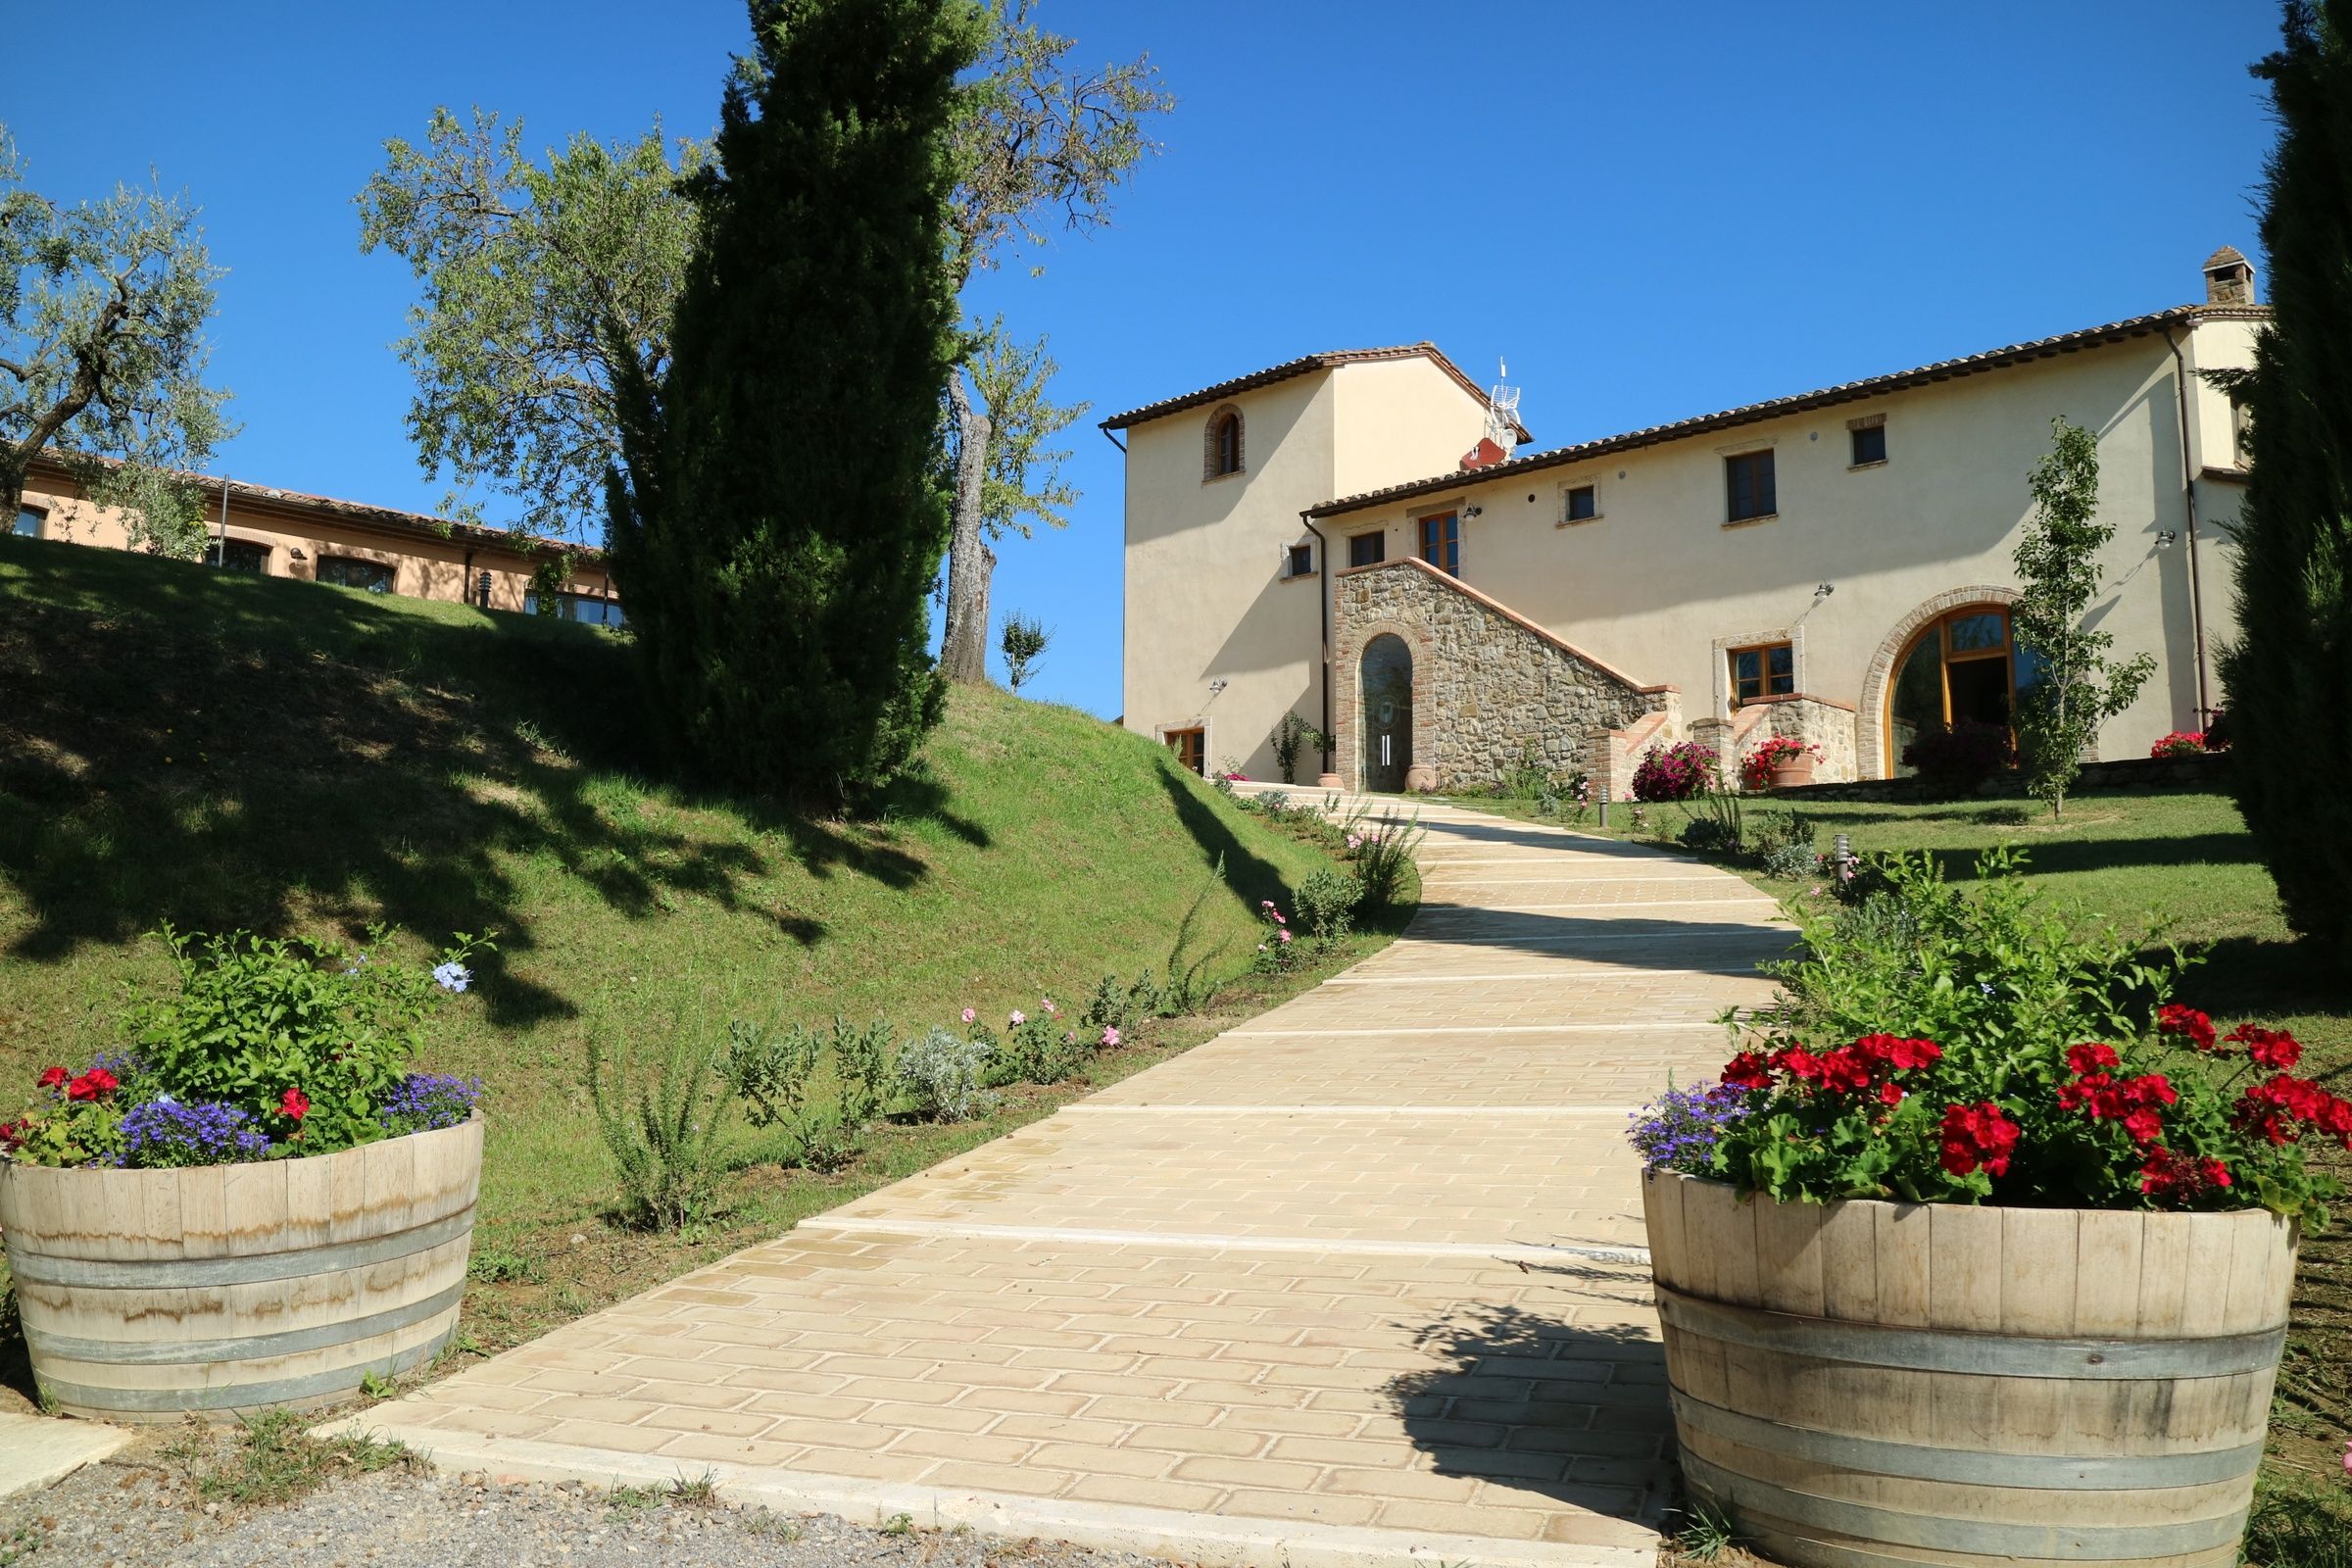 Villa Sartori